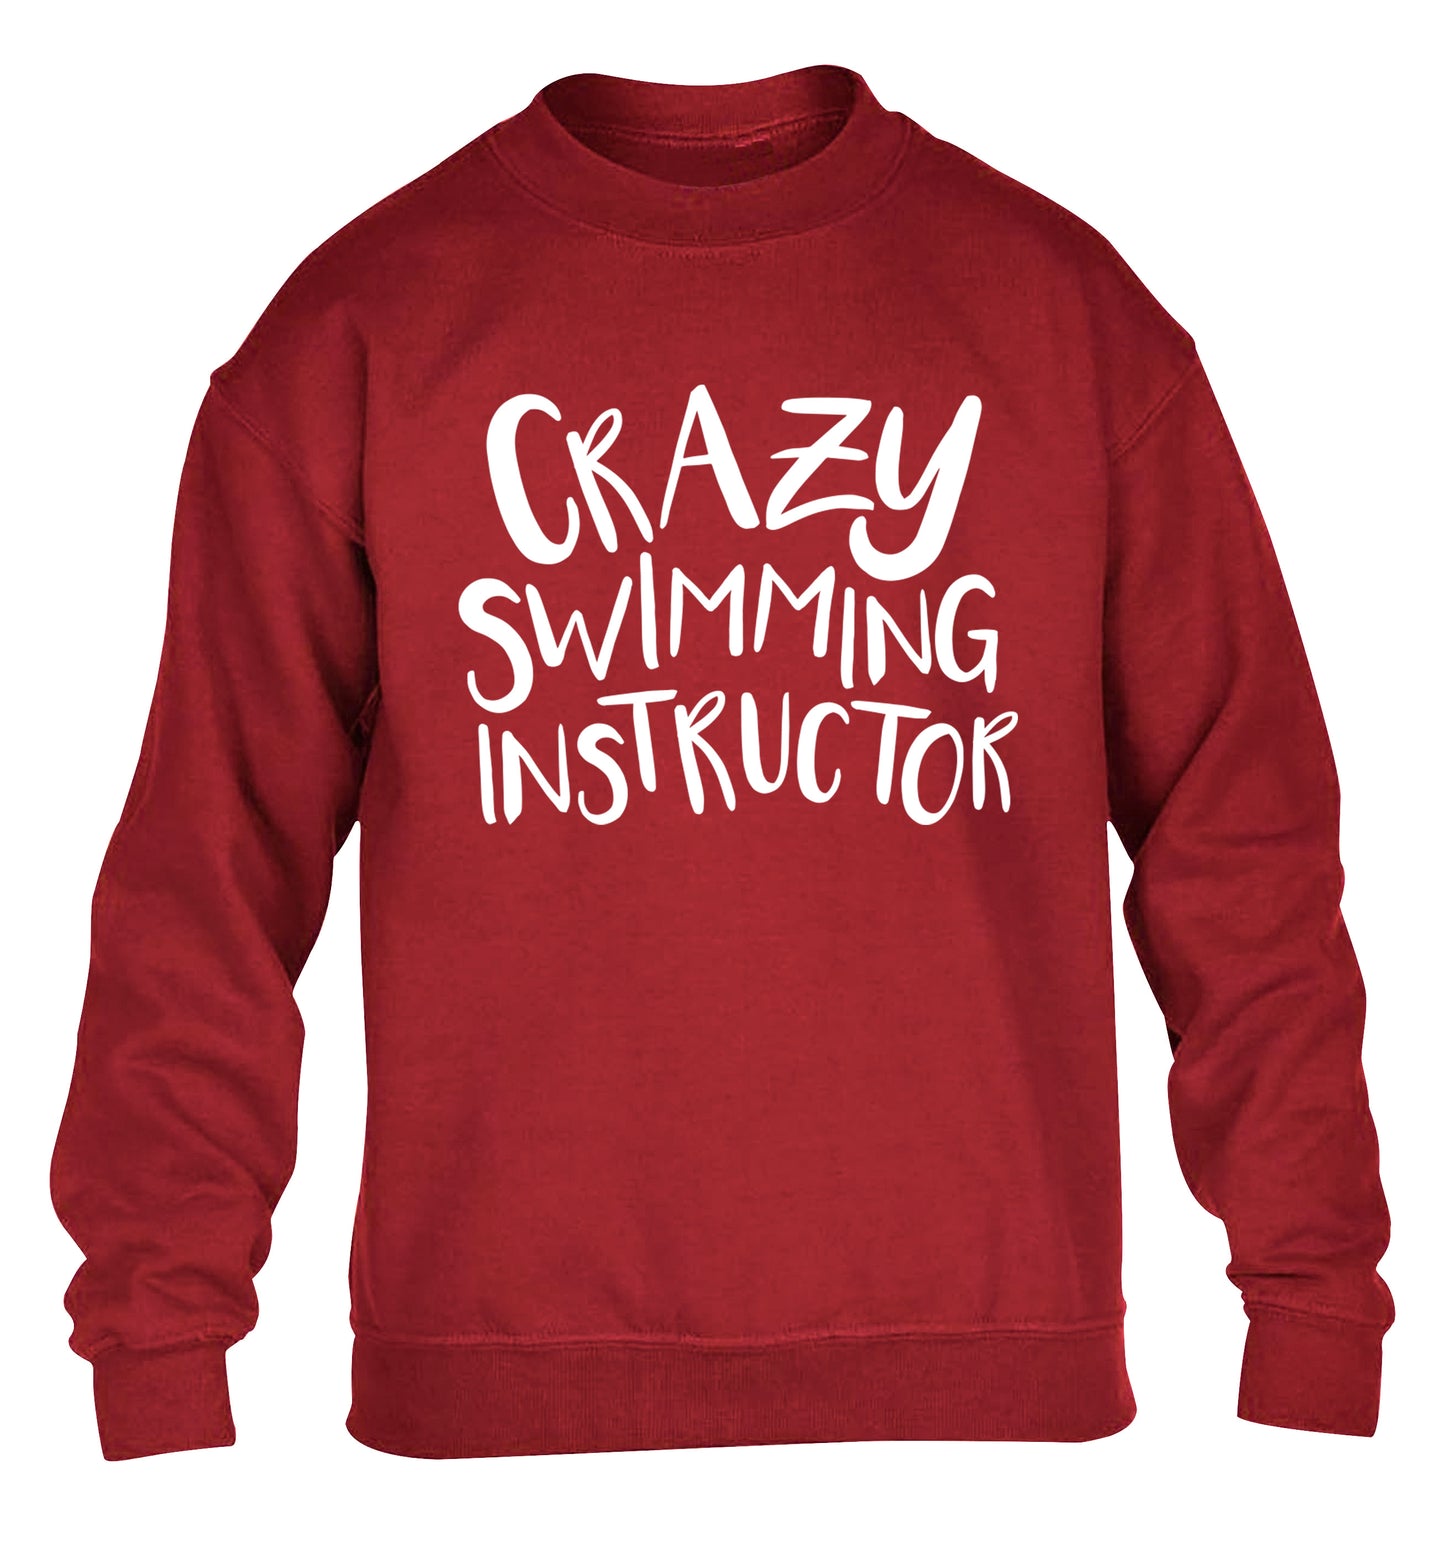 Crazy swimming instructor children's grey sweater 12-13 Years